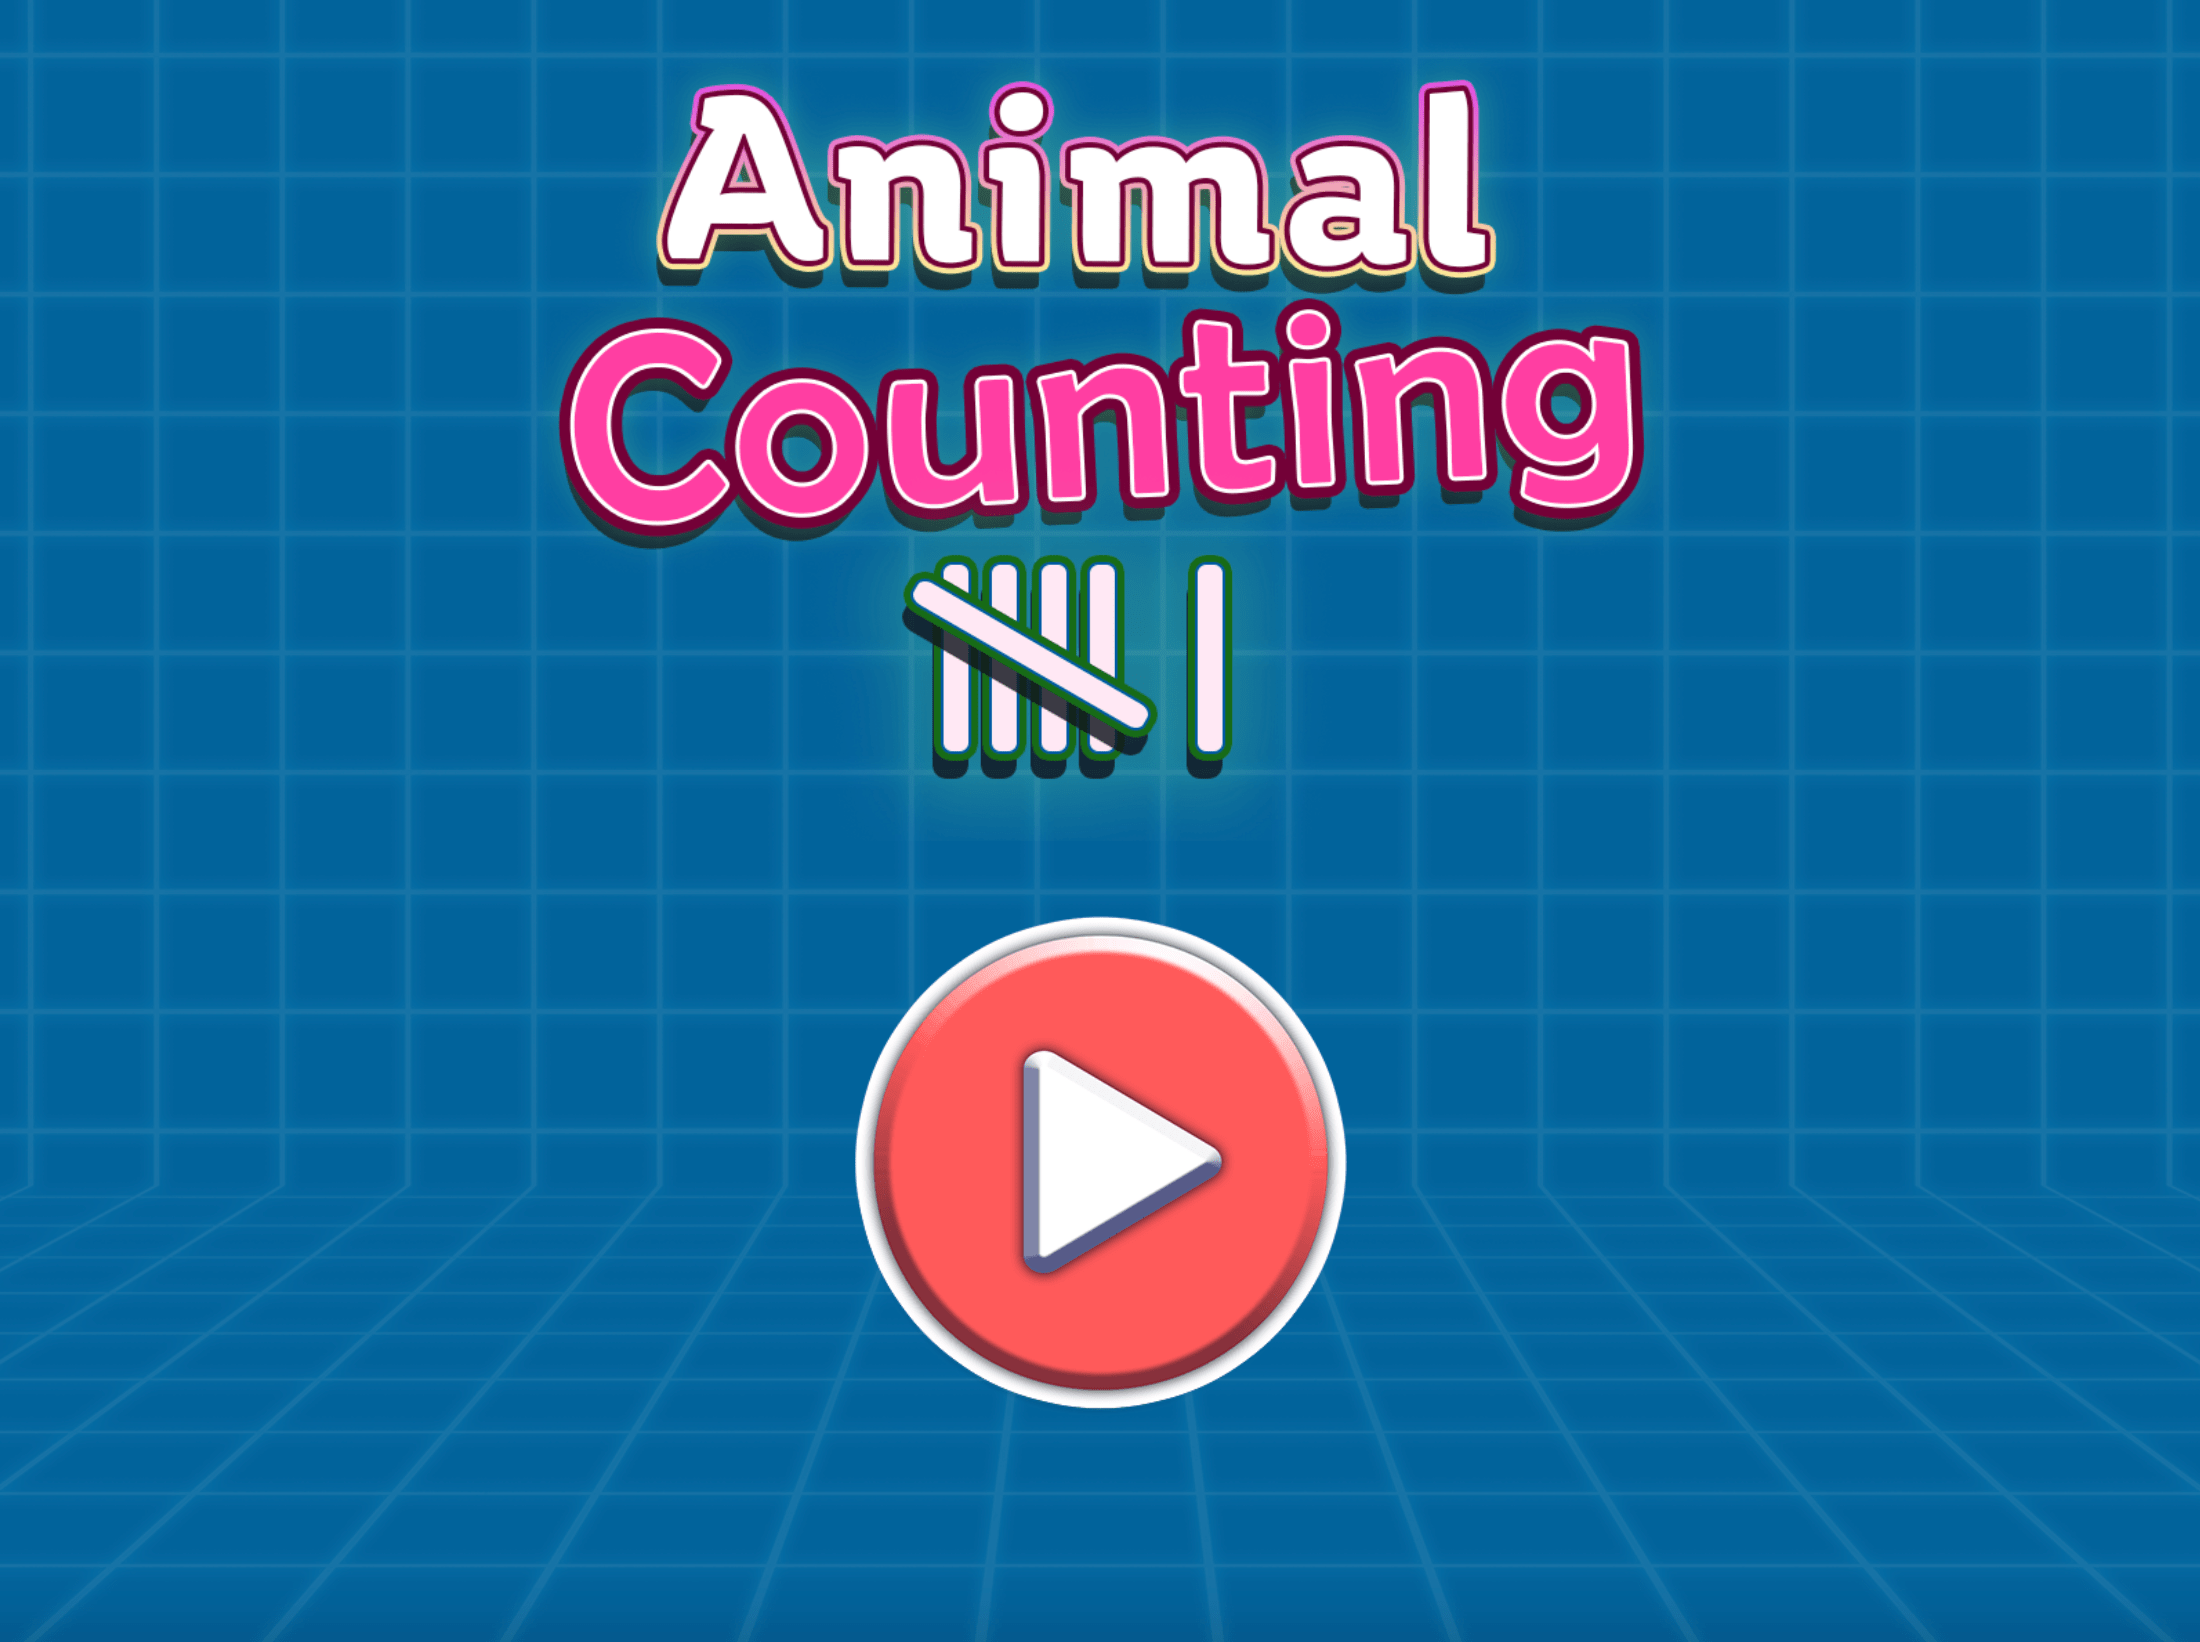 Animal Counting game